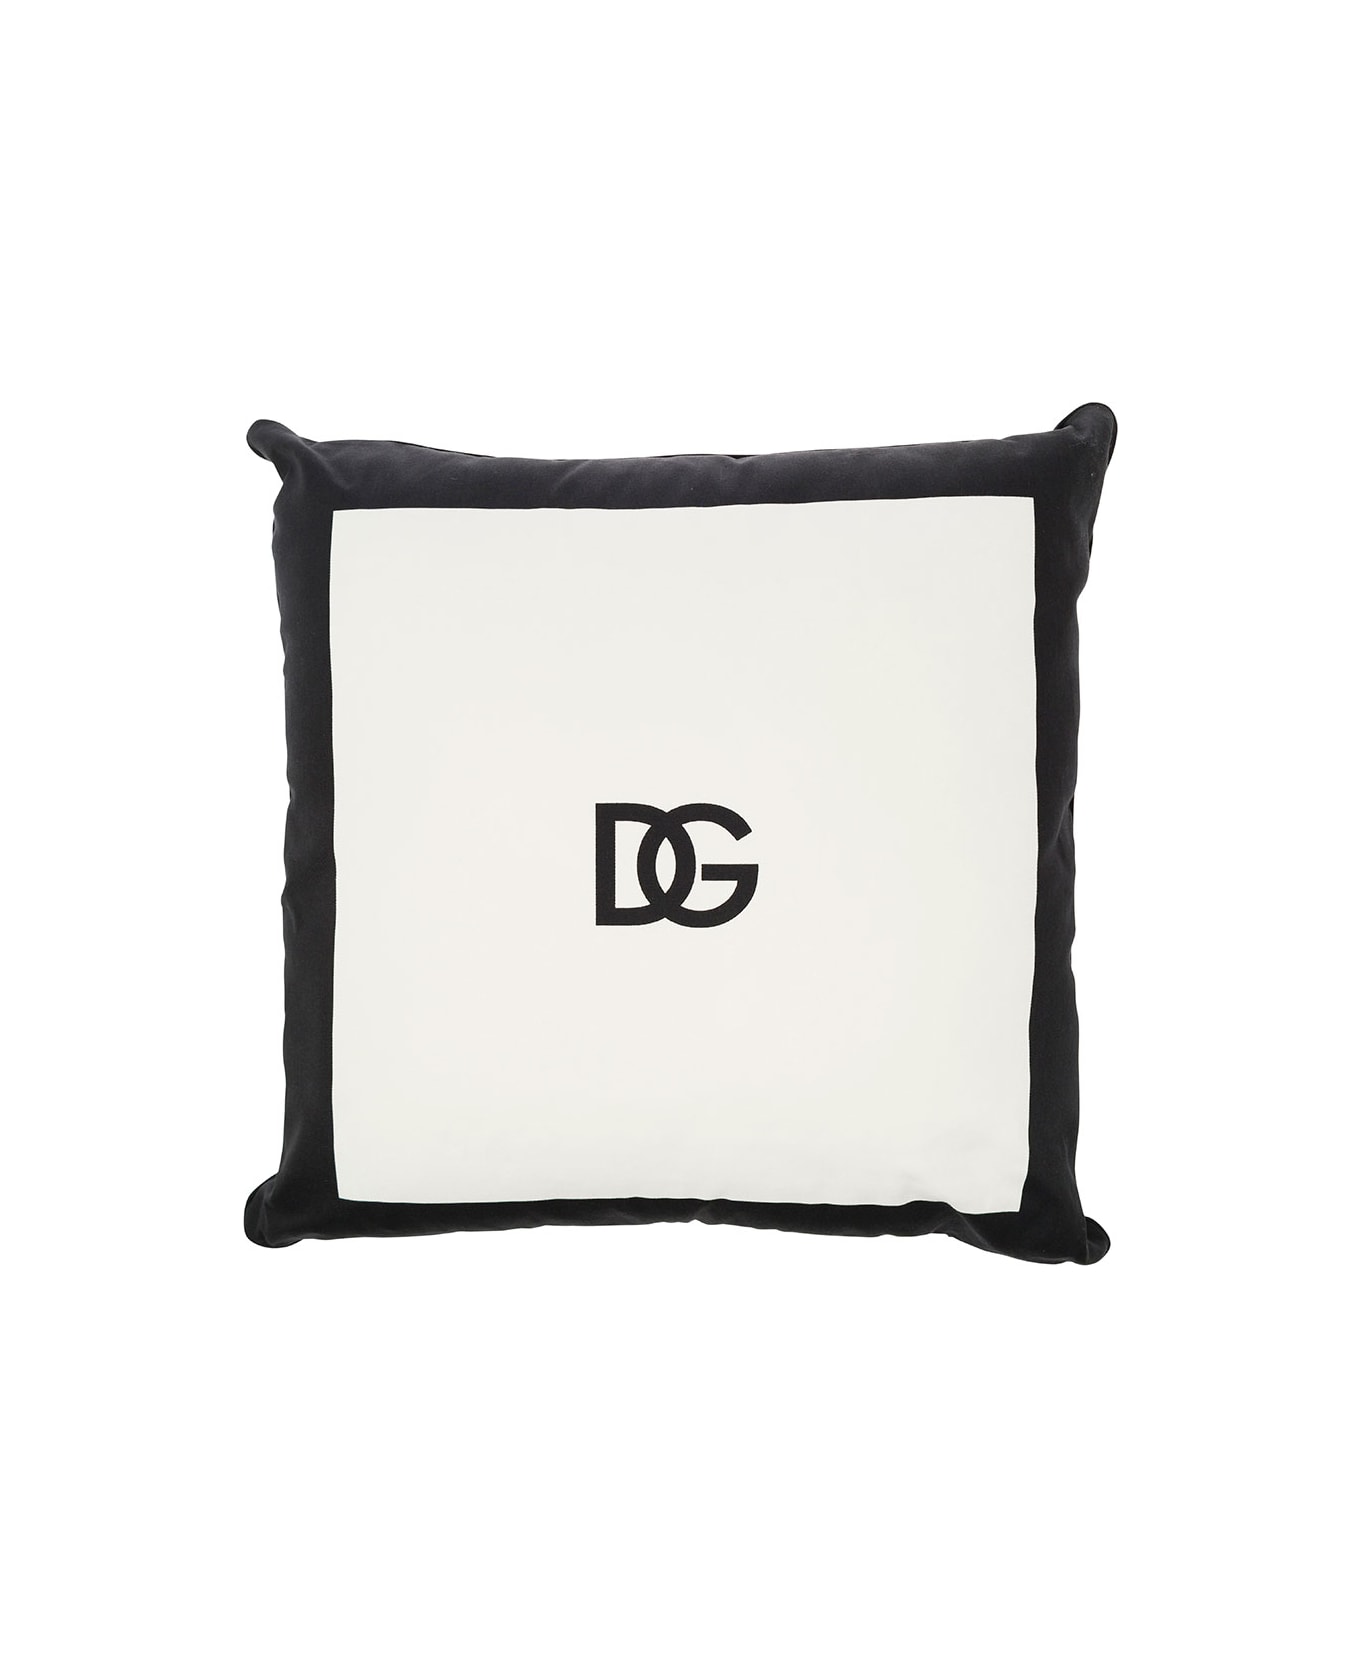 Dolce & Gabbana White And Black Cushion With Contrasting Dg Logo Print In Cotton - White インテリア雑貨